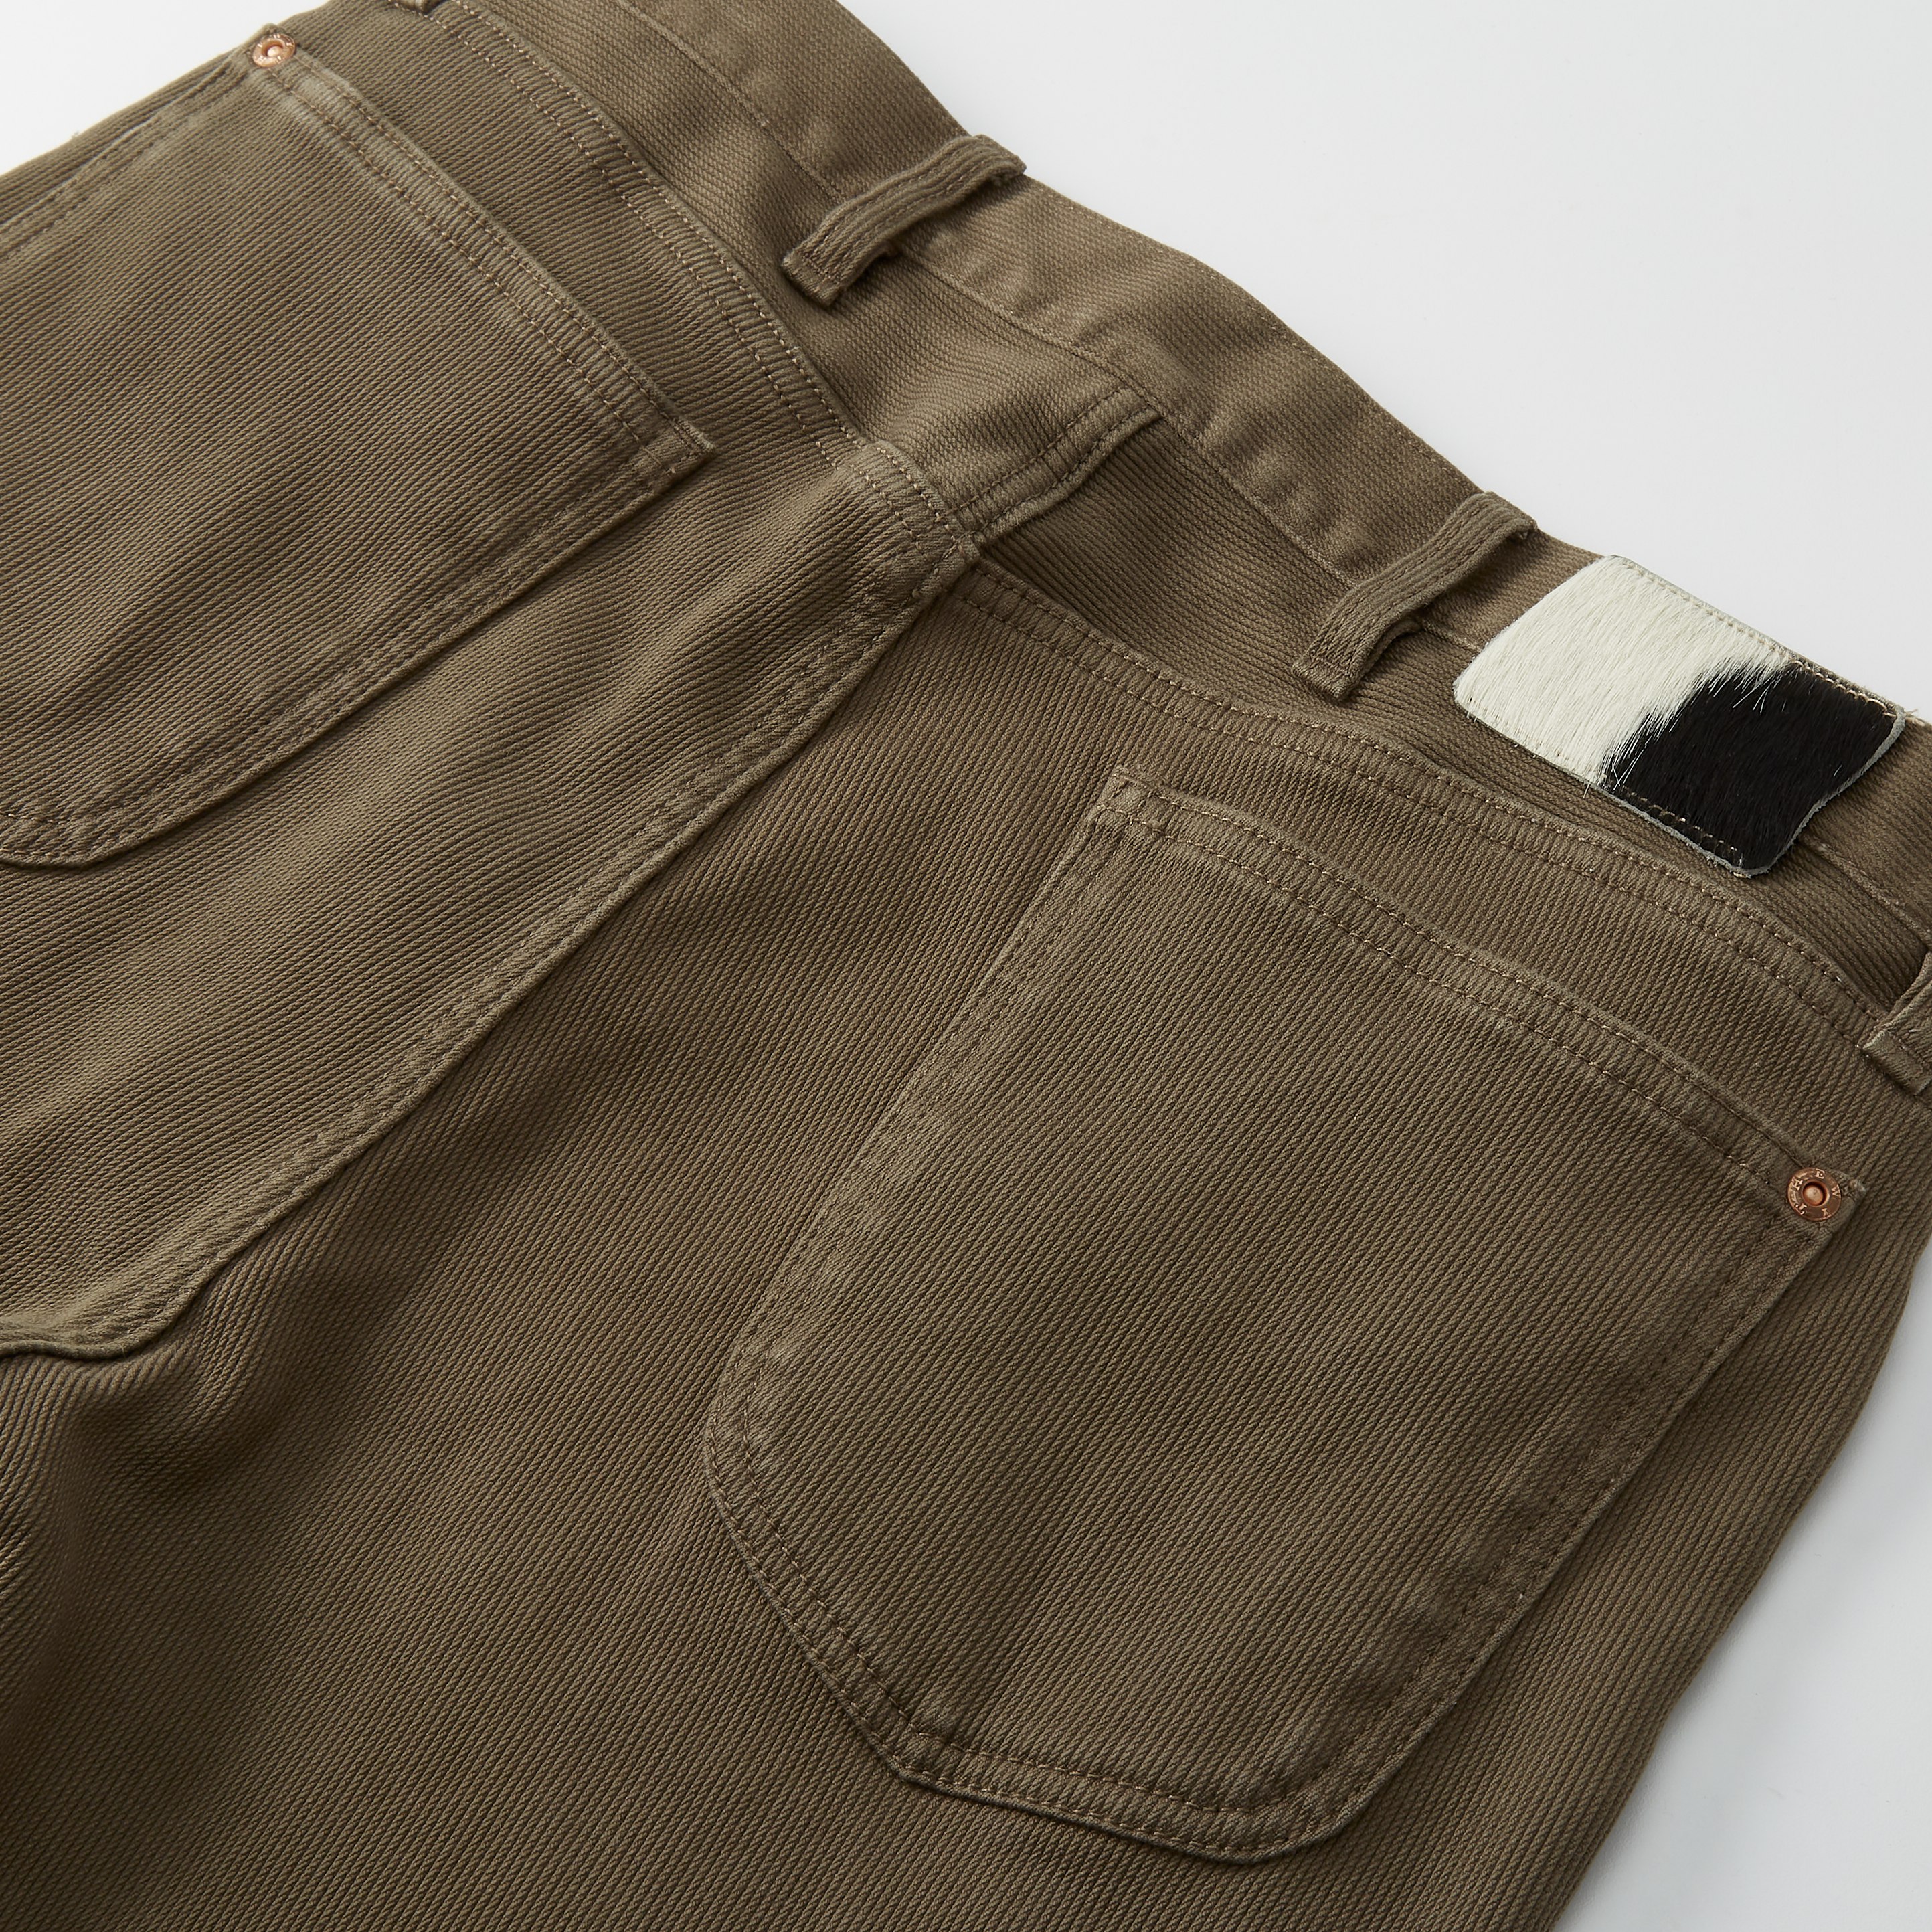 Tan - Bedford Cord Trouser | SPIER & MACKAY